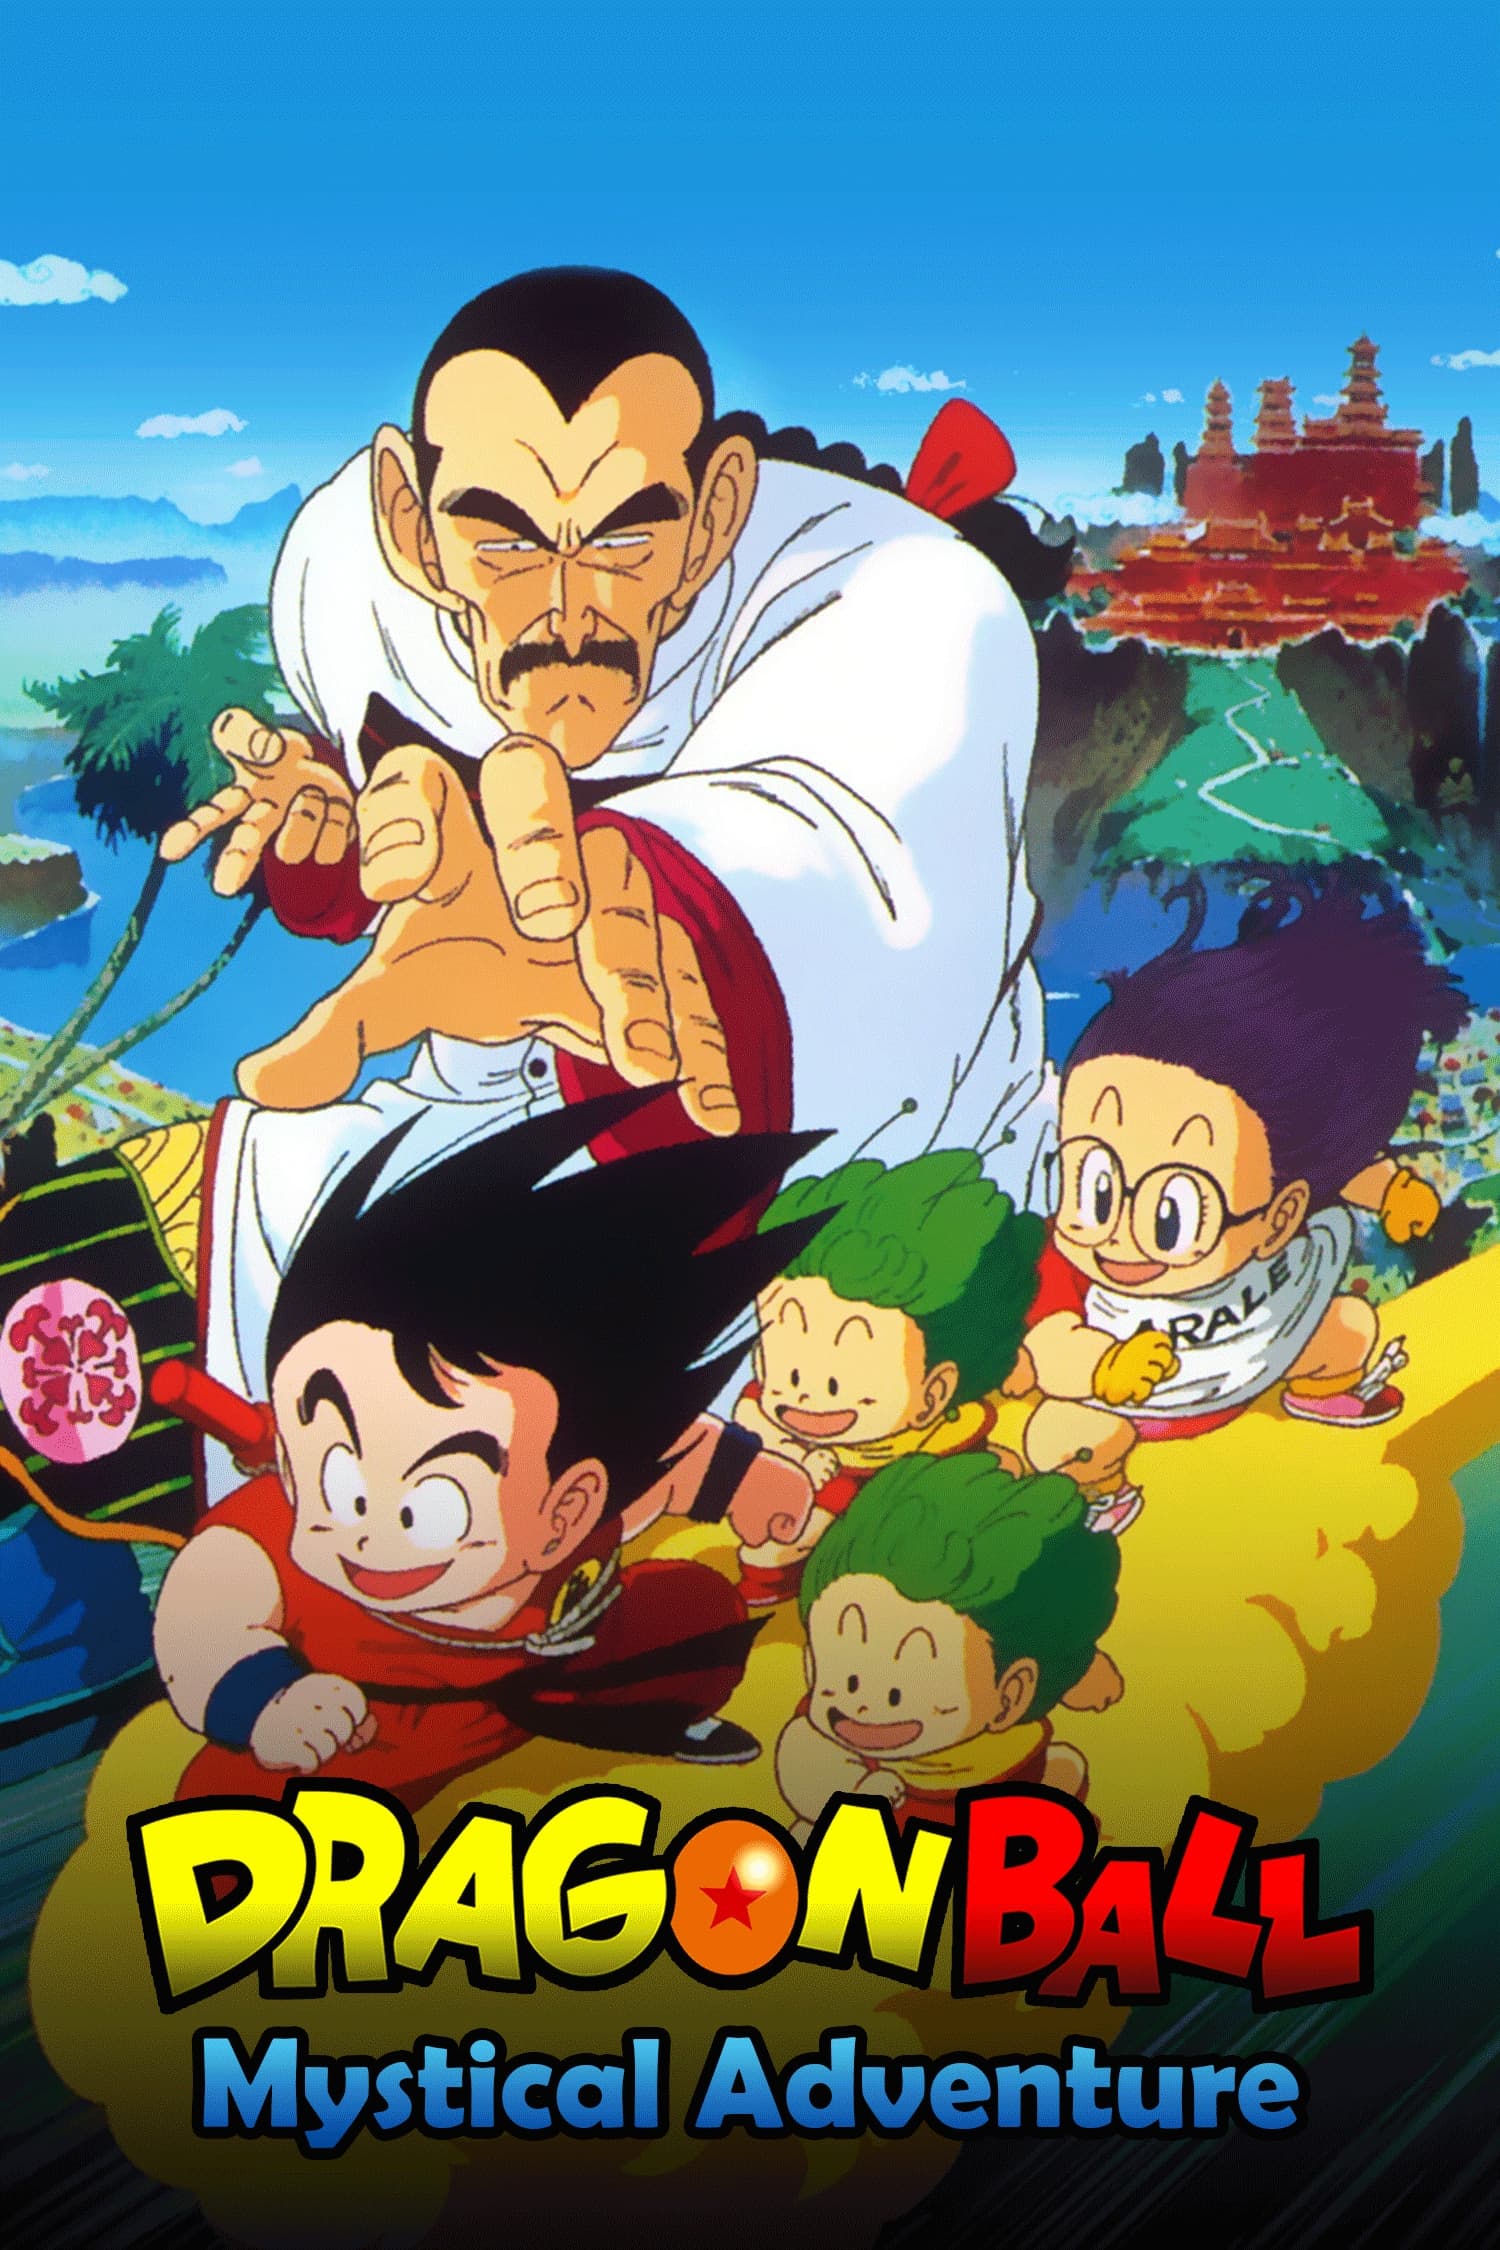 Dragonball: Son-Gokus erstes Turnier (1988)